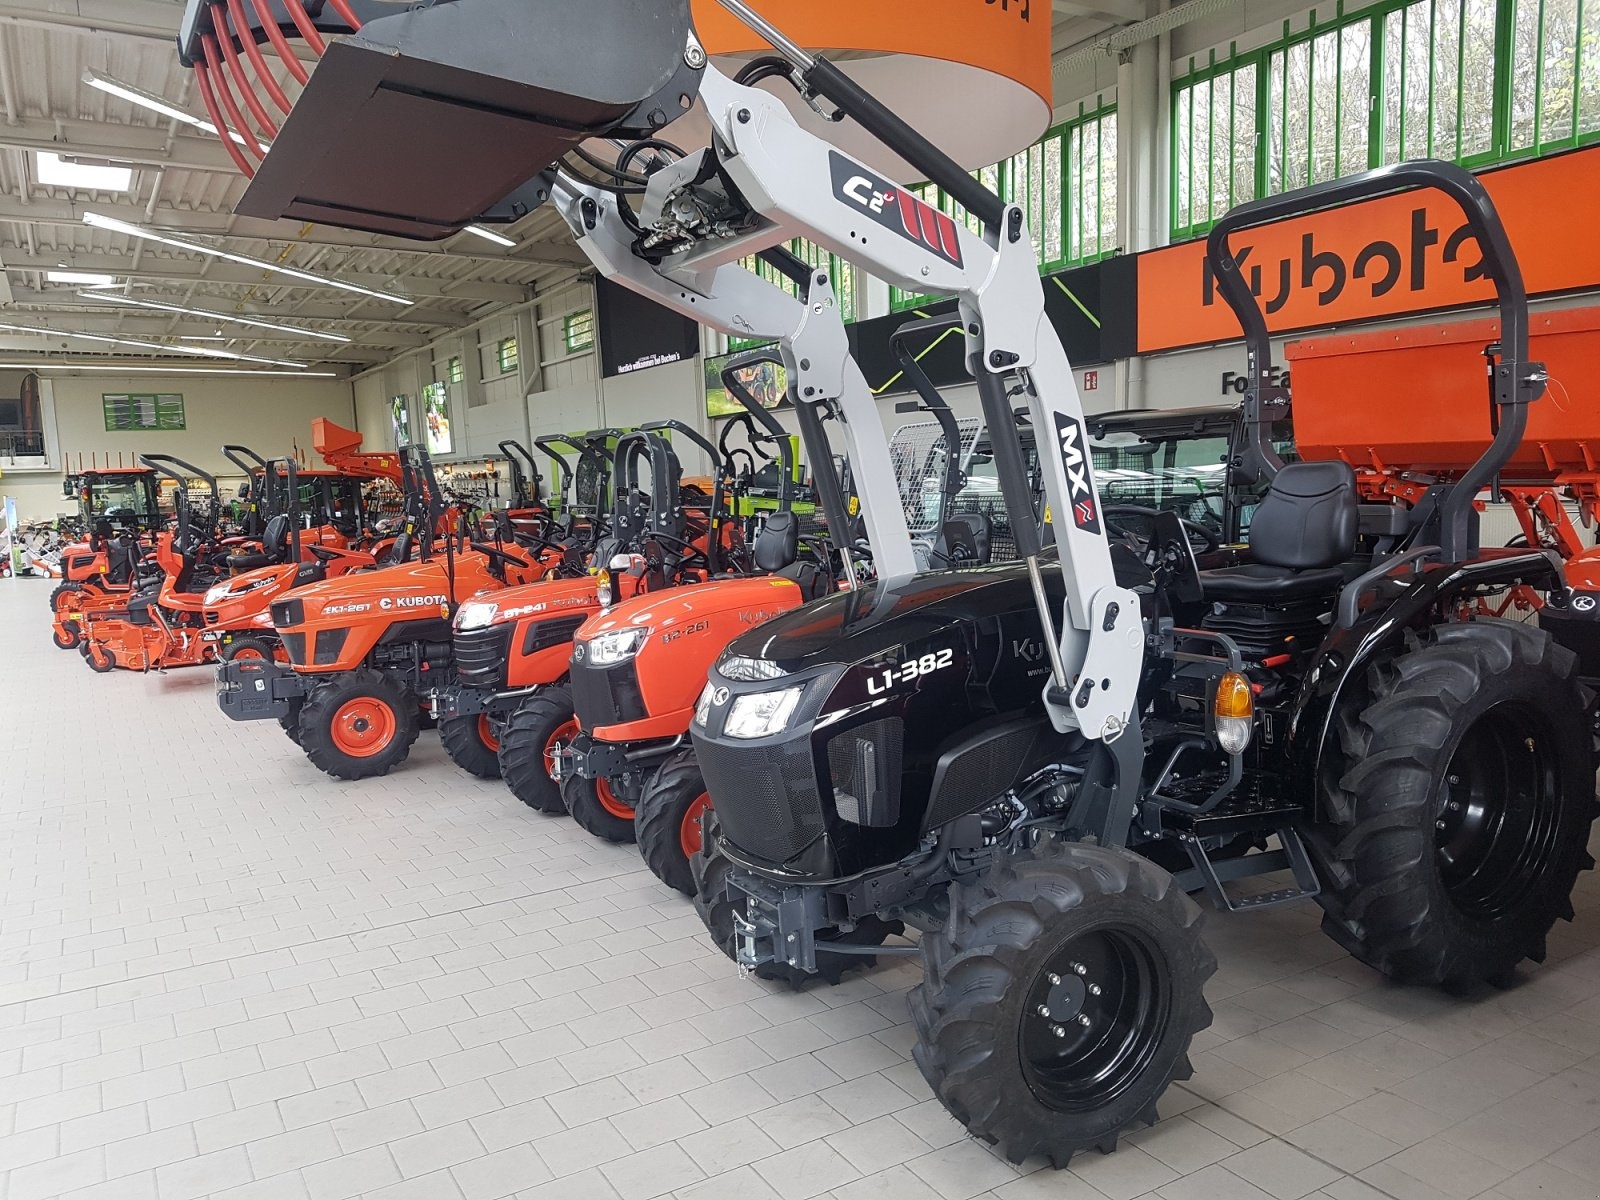 Kubota L1-382 tractor €28,800